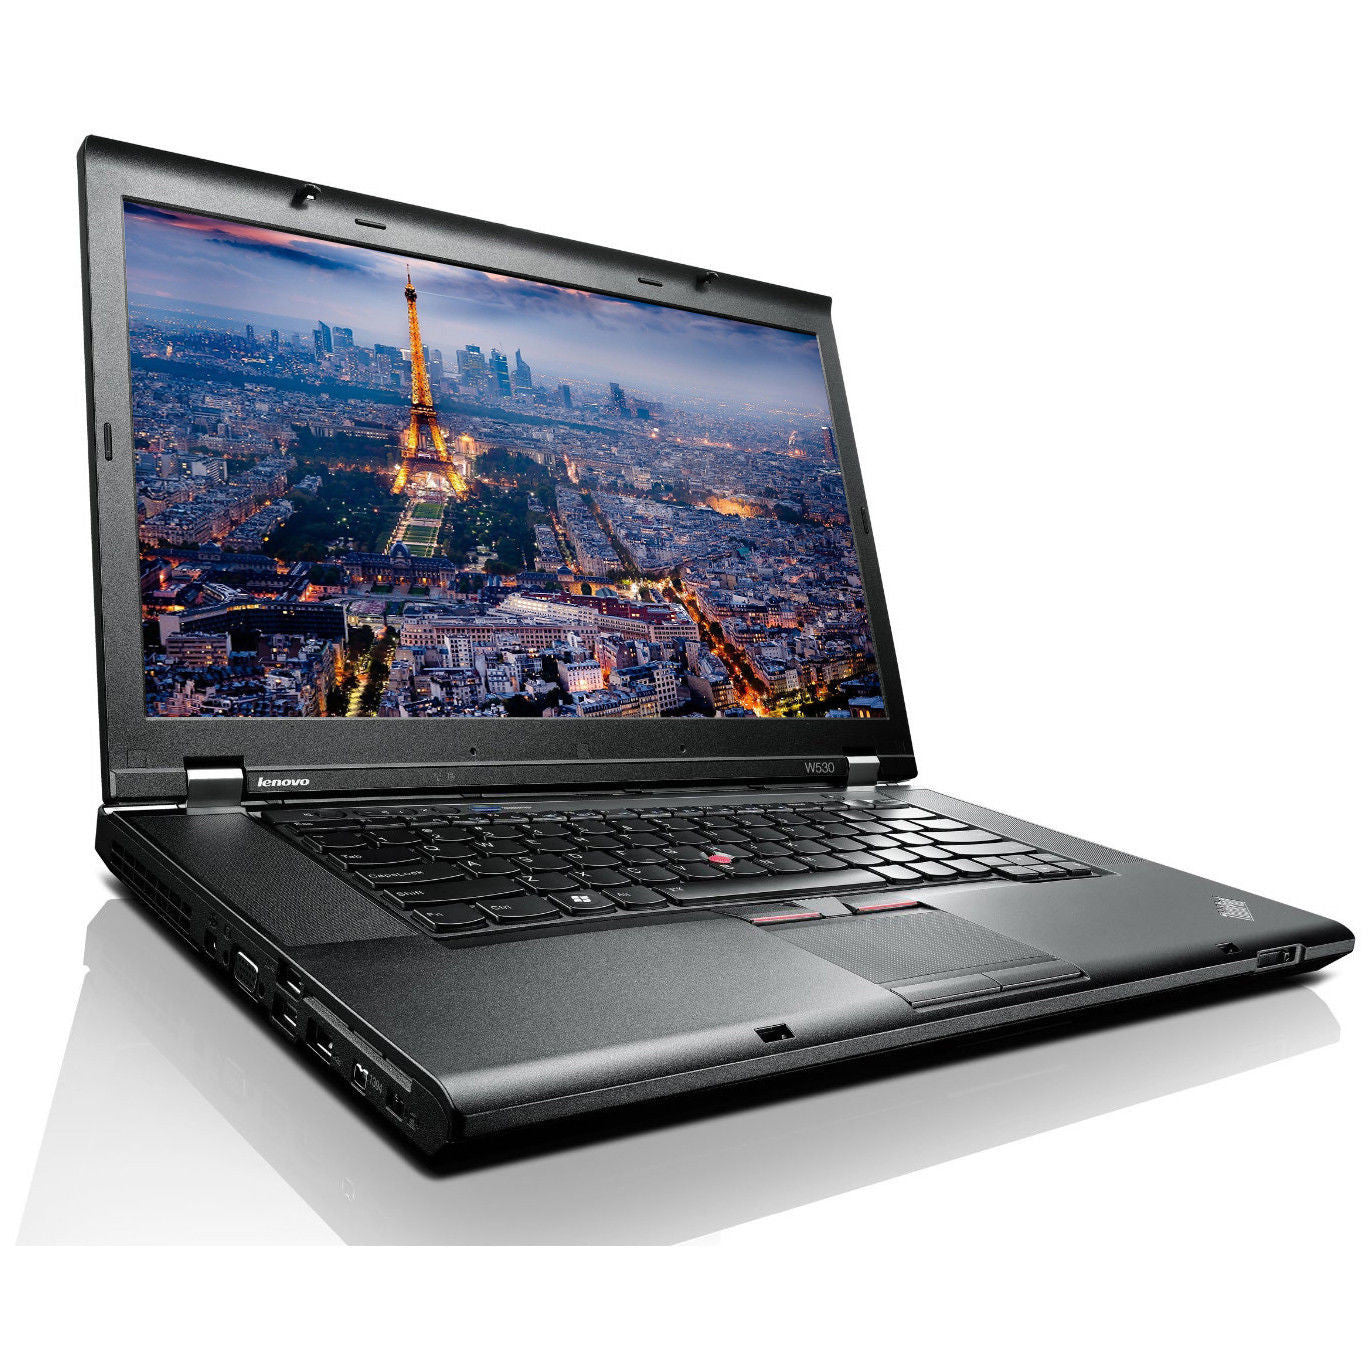 Lenovo ThinkPad T530 Refurbished Laptop on Sale | Free Shipping Canada